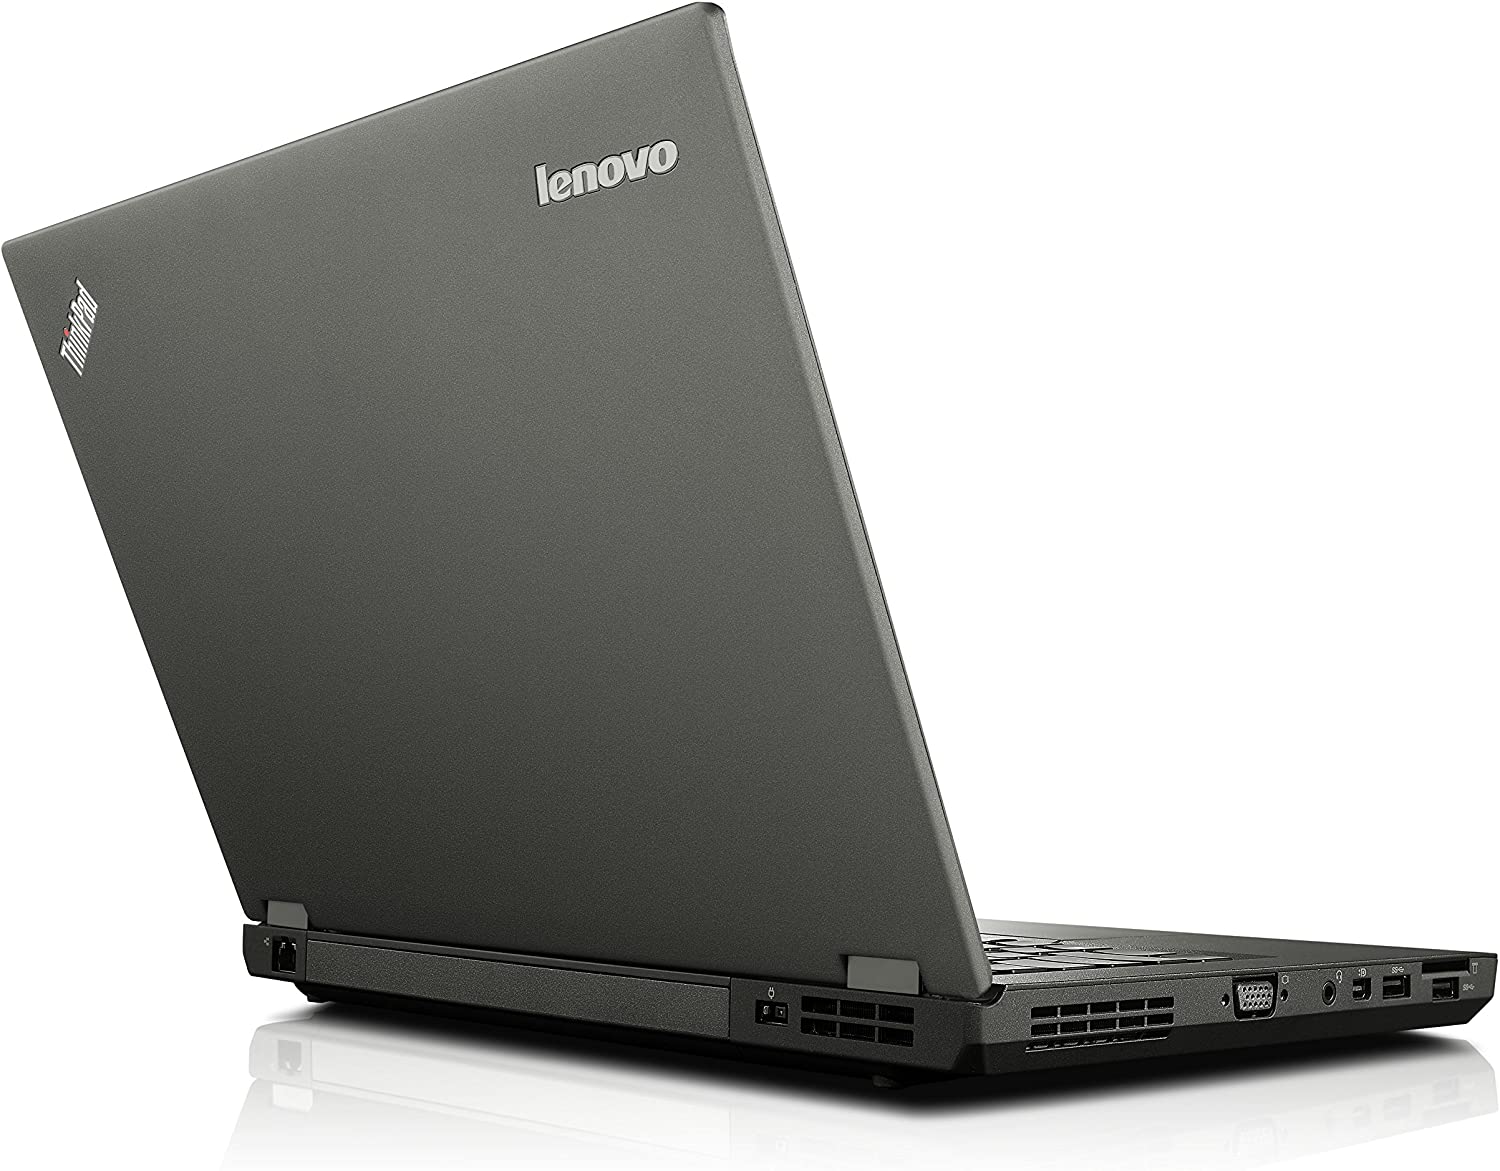 Lenovo ThinkPad T440p 14" Laptop, Intel Core i5, 8GB RAM, 128GB SSD, Win10 Home. Refurbished